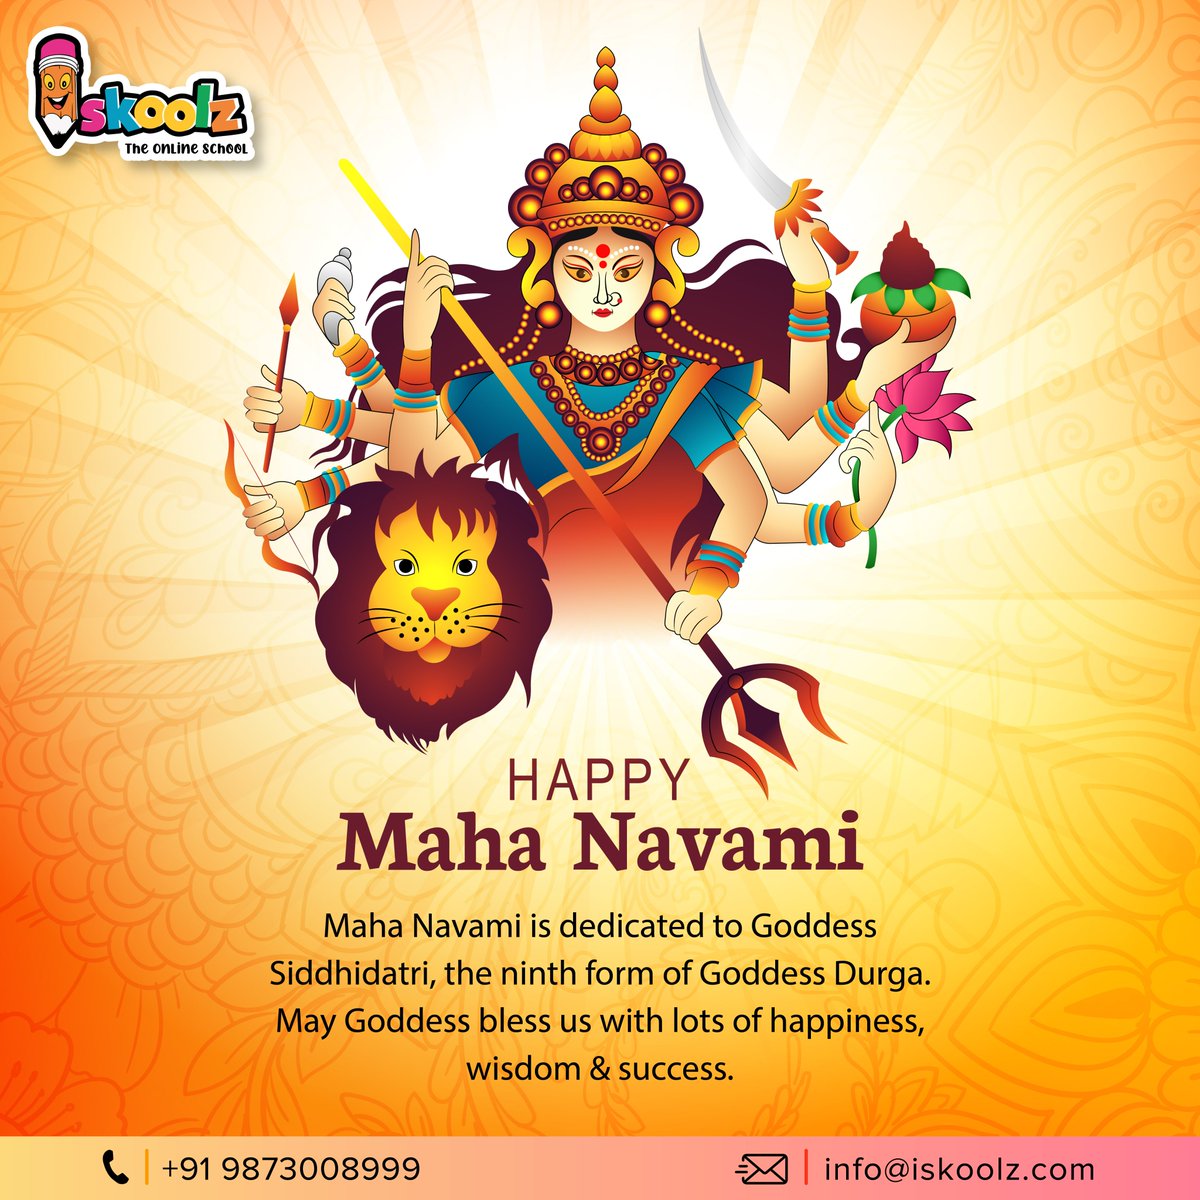 Maha Navami is dedicated to Goddess Siddhidatri, the ninth form of Goddess Durga.
May Goddess bless us with lots of happiness, wisdom & success.
 
#iskoolz #iskoolzfamily #onlineschool #mahanavami #happynavratri #navratri2022 #navratrispecial #shaktiutsav #navratri #celebrations